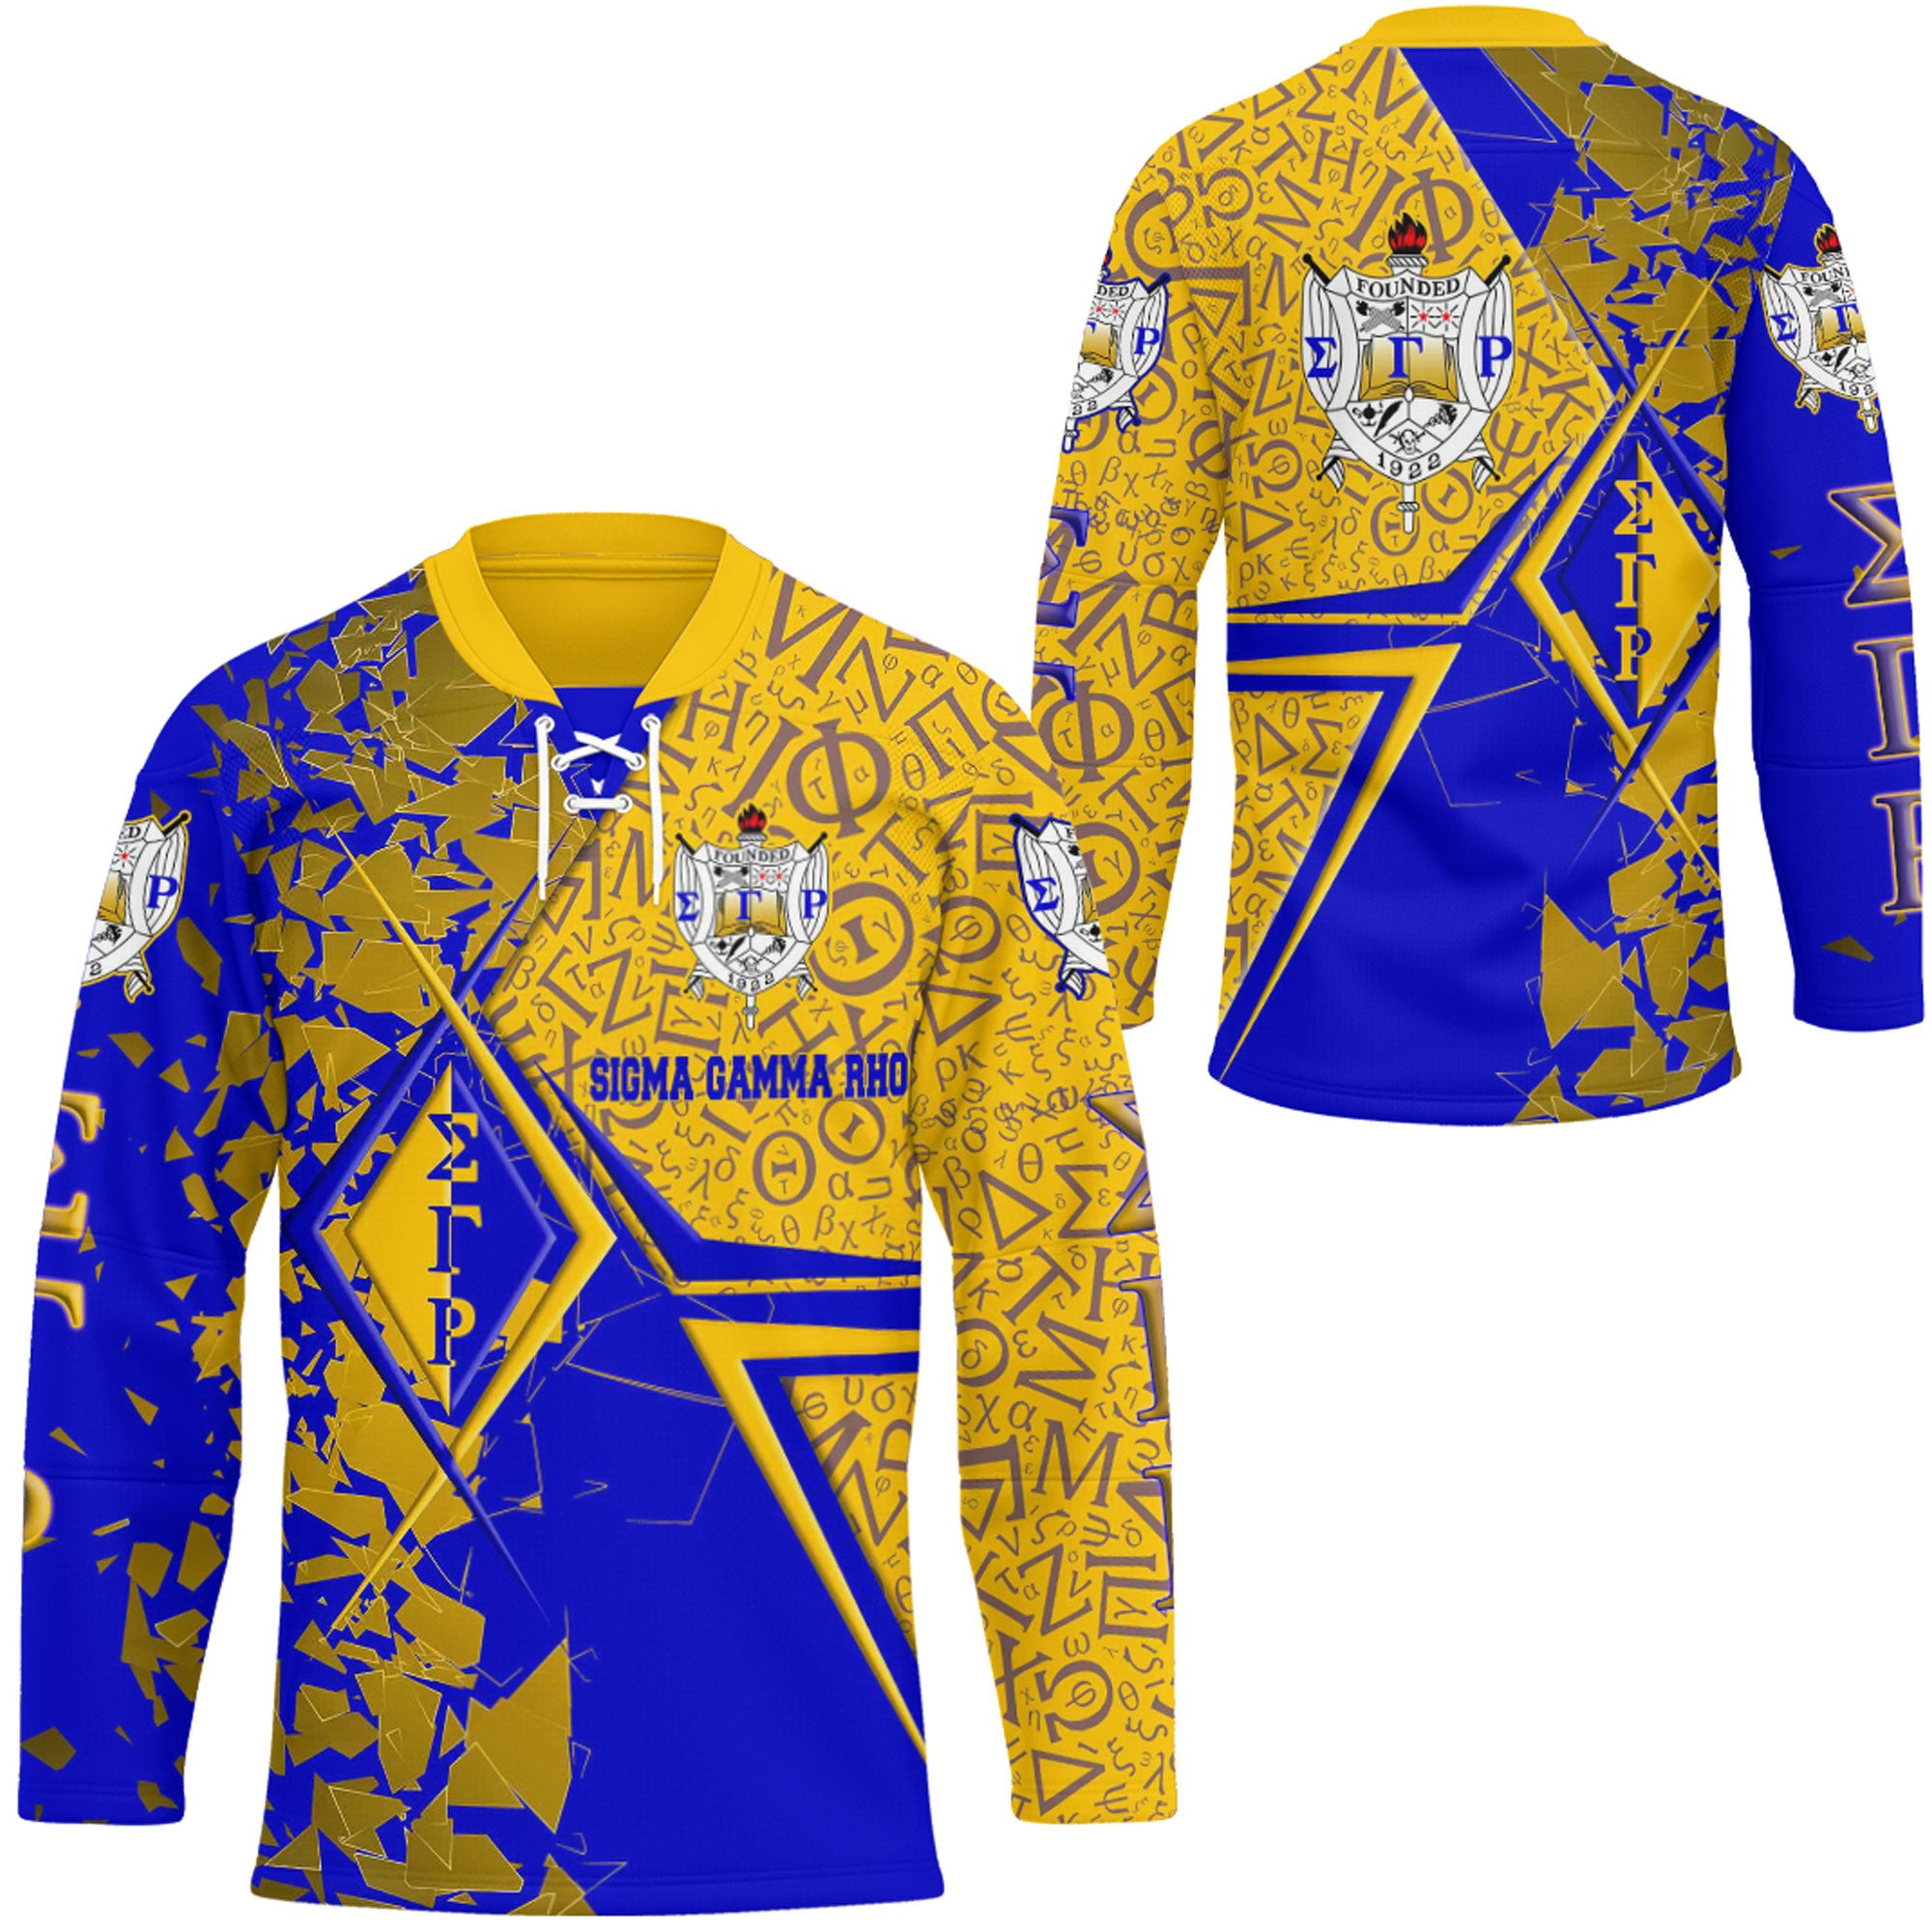 Africa Zone Clothing – Sigma Gamma Rho Legend Hockey Jersey A35